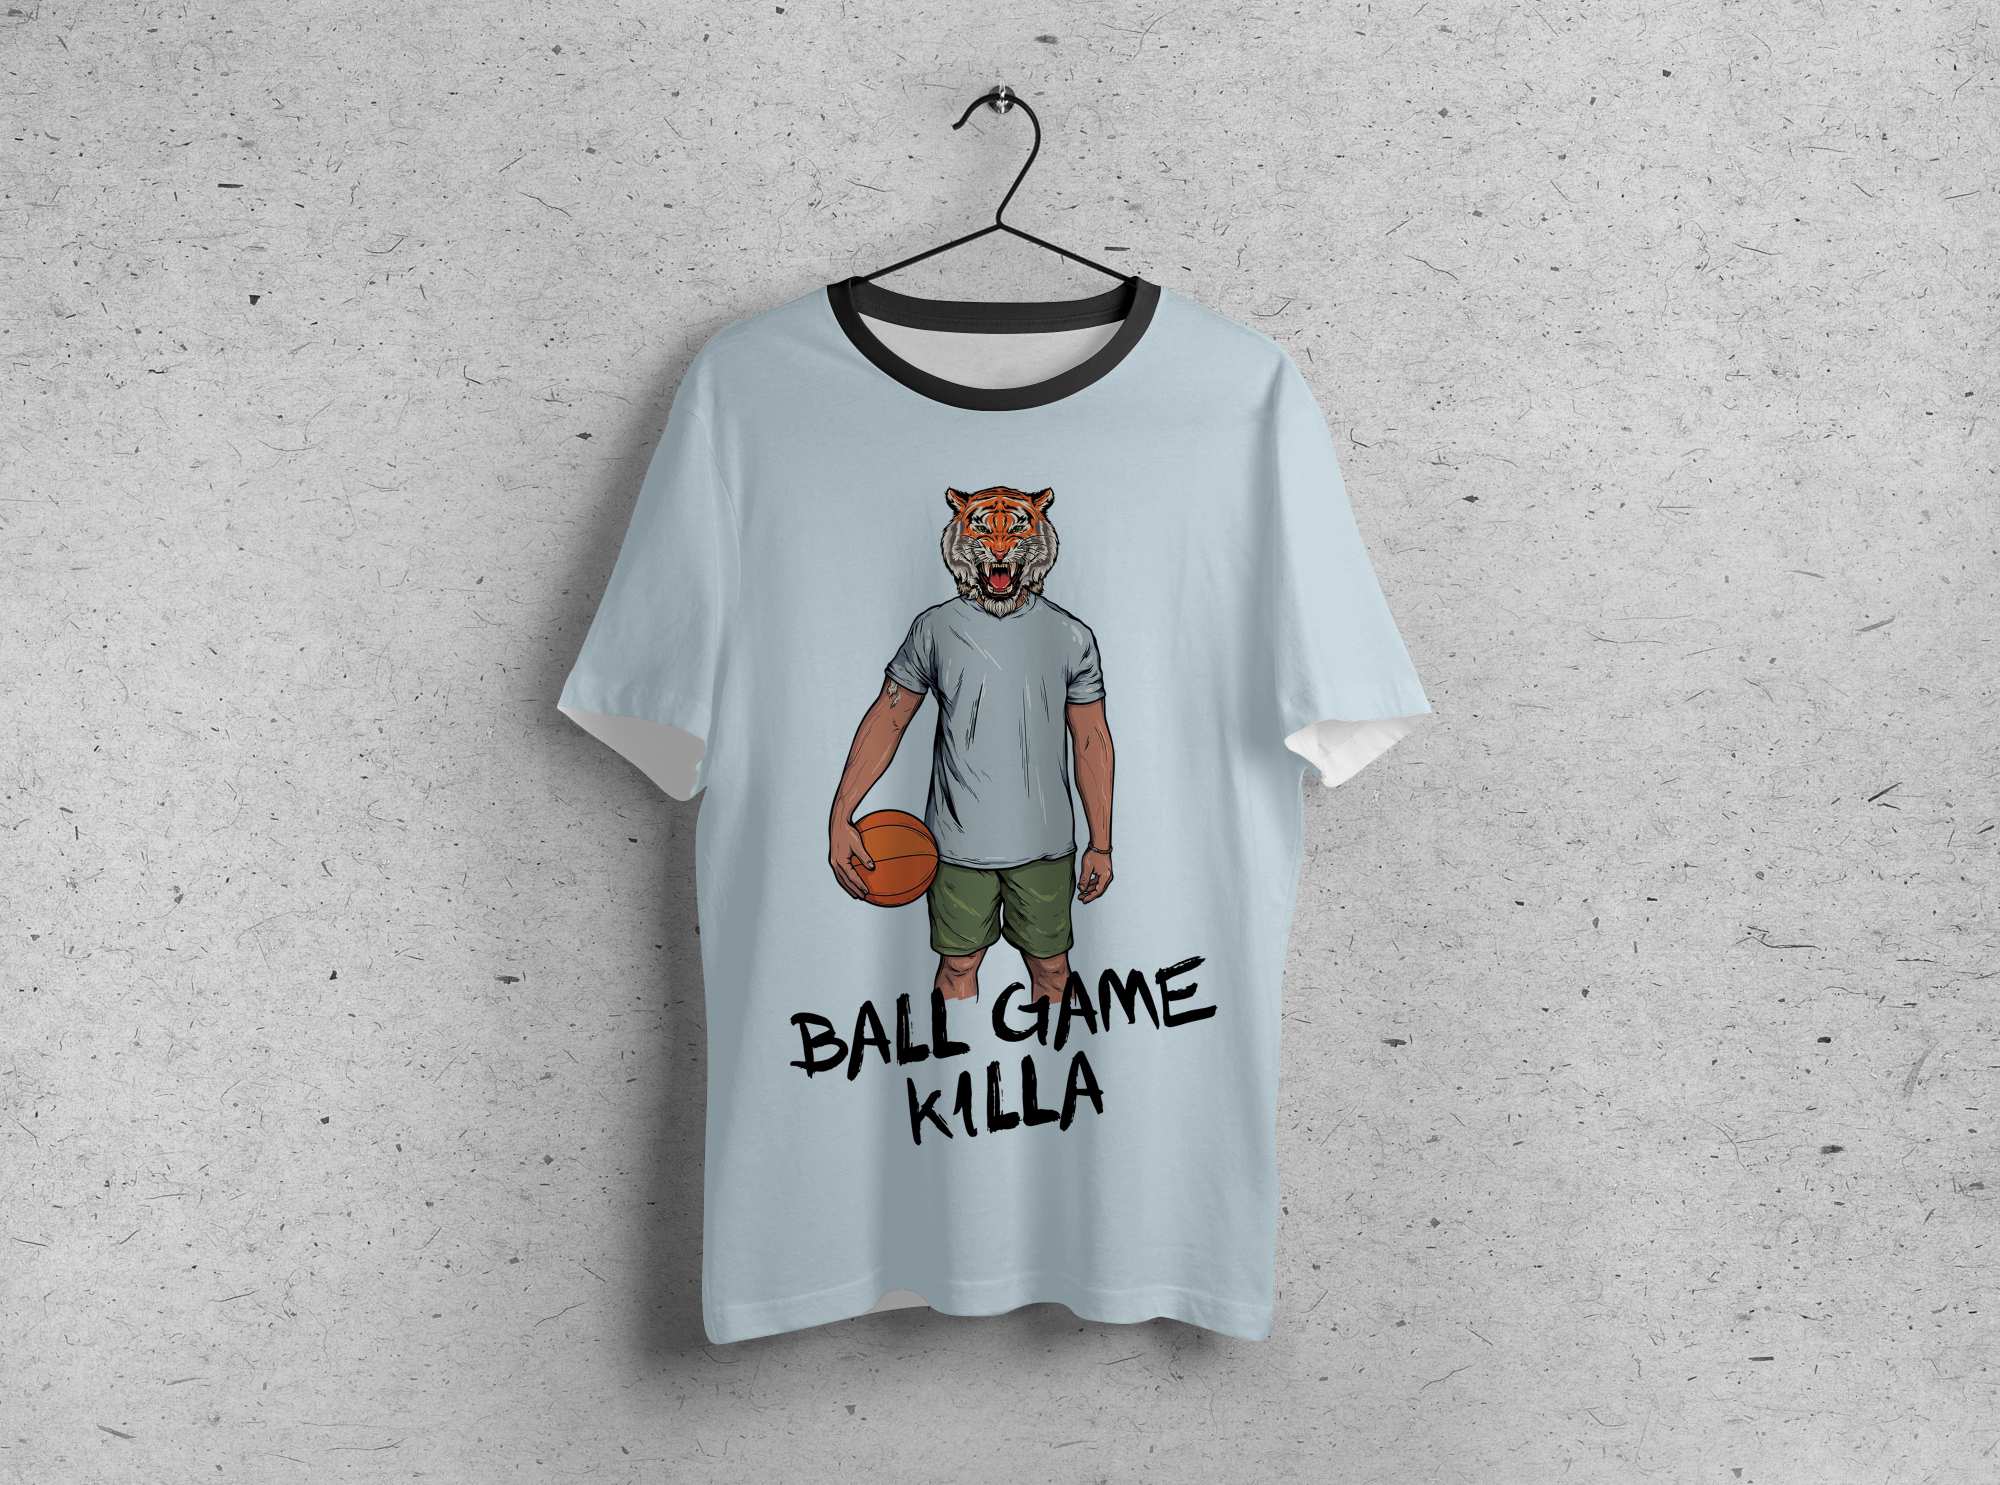 Ball game killa5